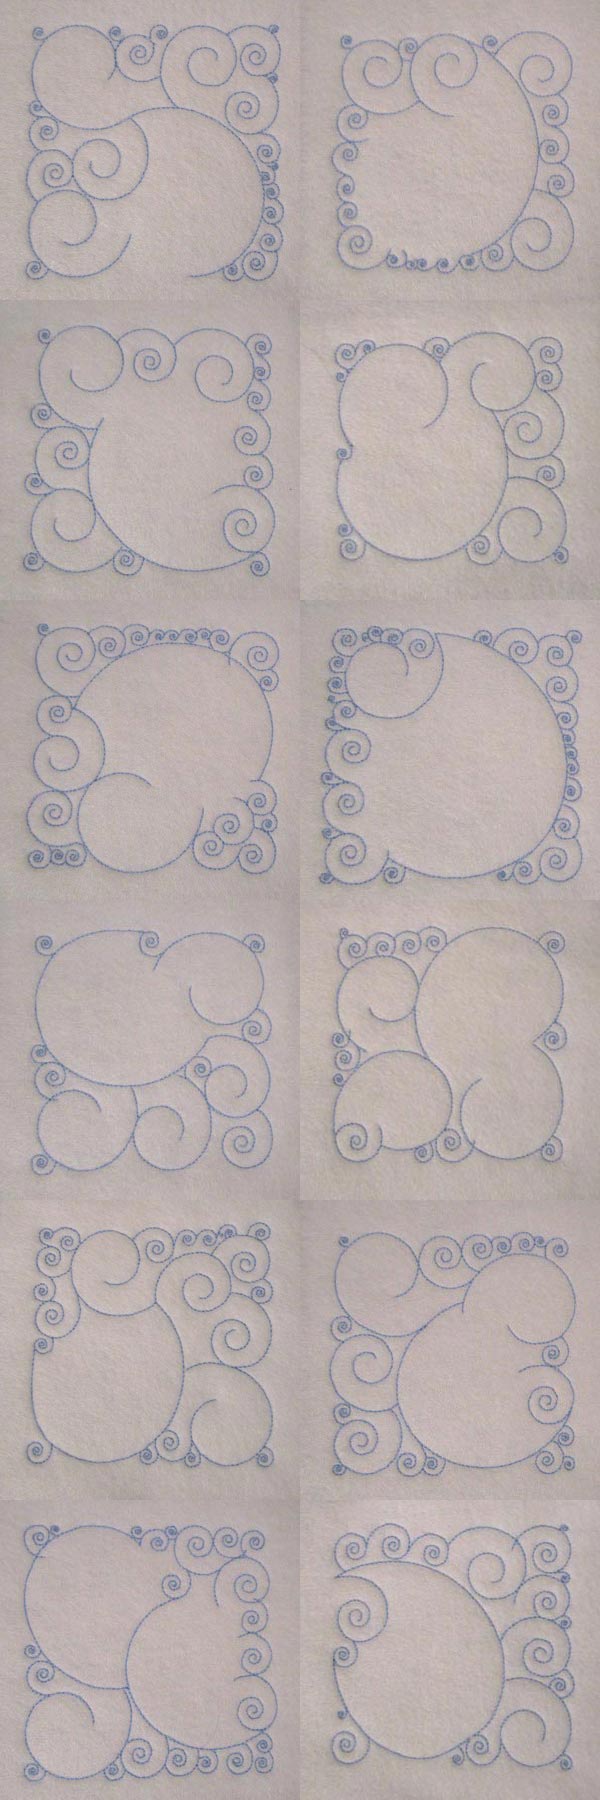 Swirly Square Background Blocks Embroidery Machine Design Details